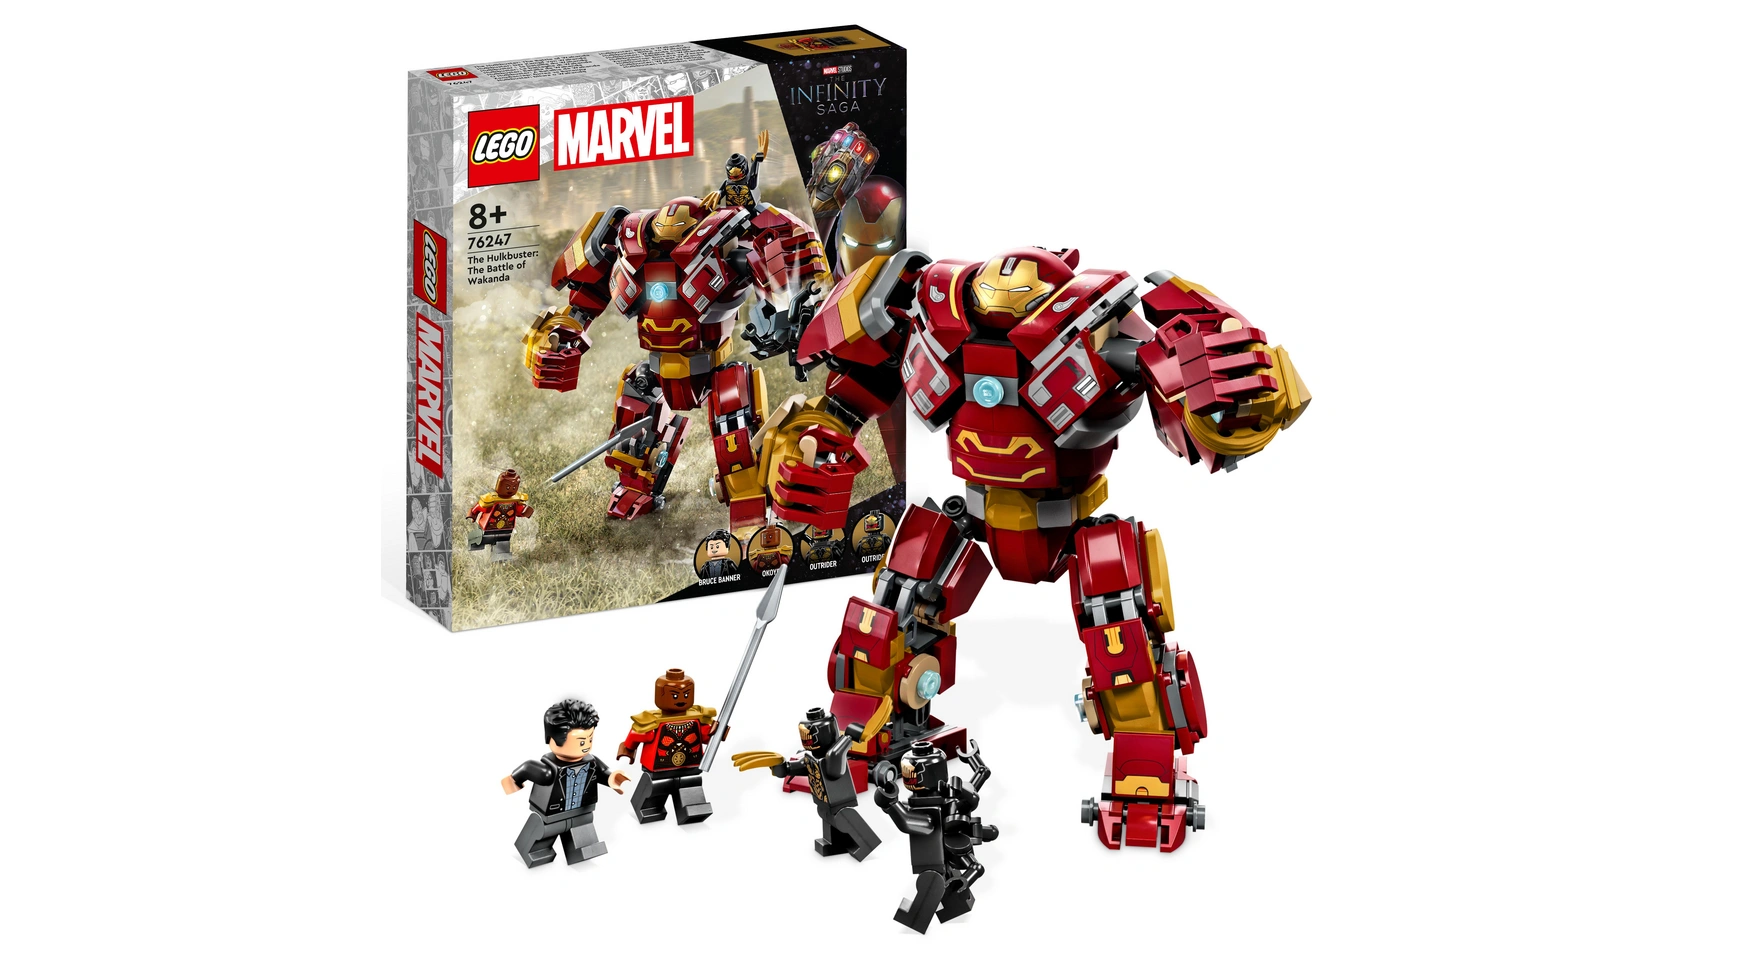 lego 76247 the hulkbuster the battle of wakanda Lego Marvel Фигурка Халкбастер: Битва за Ваканду